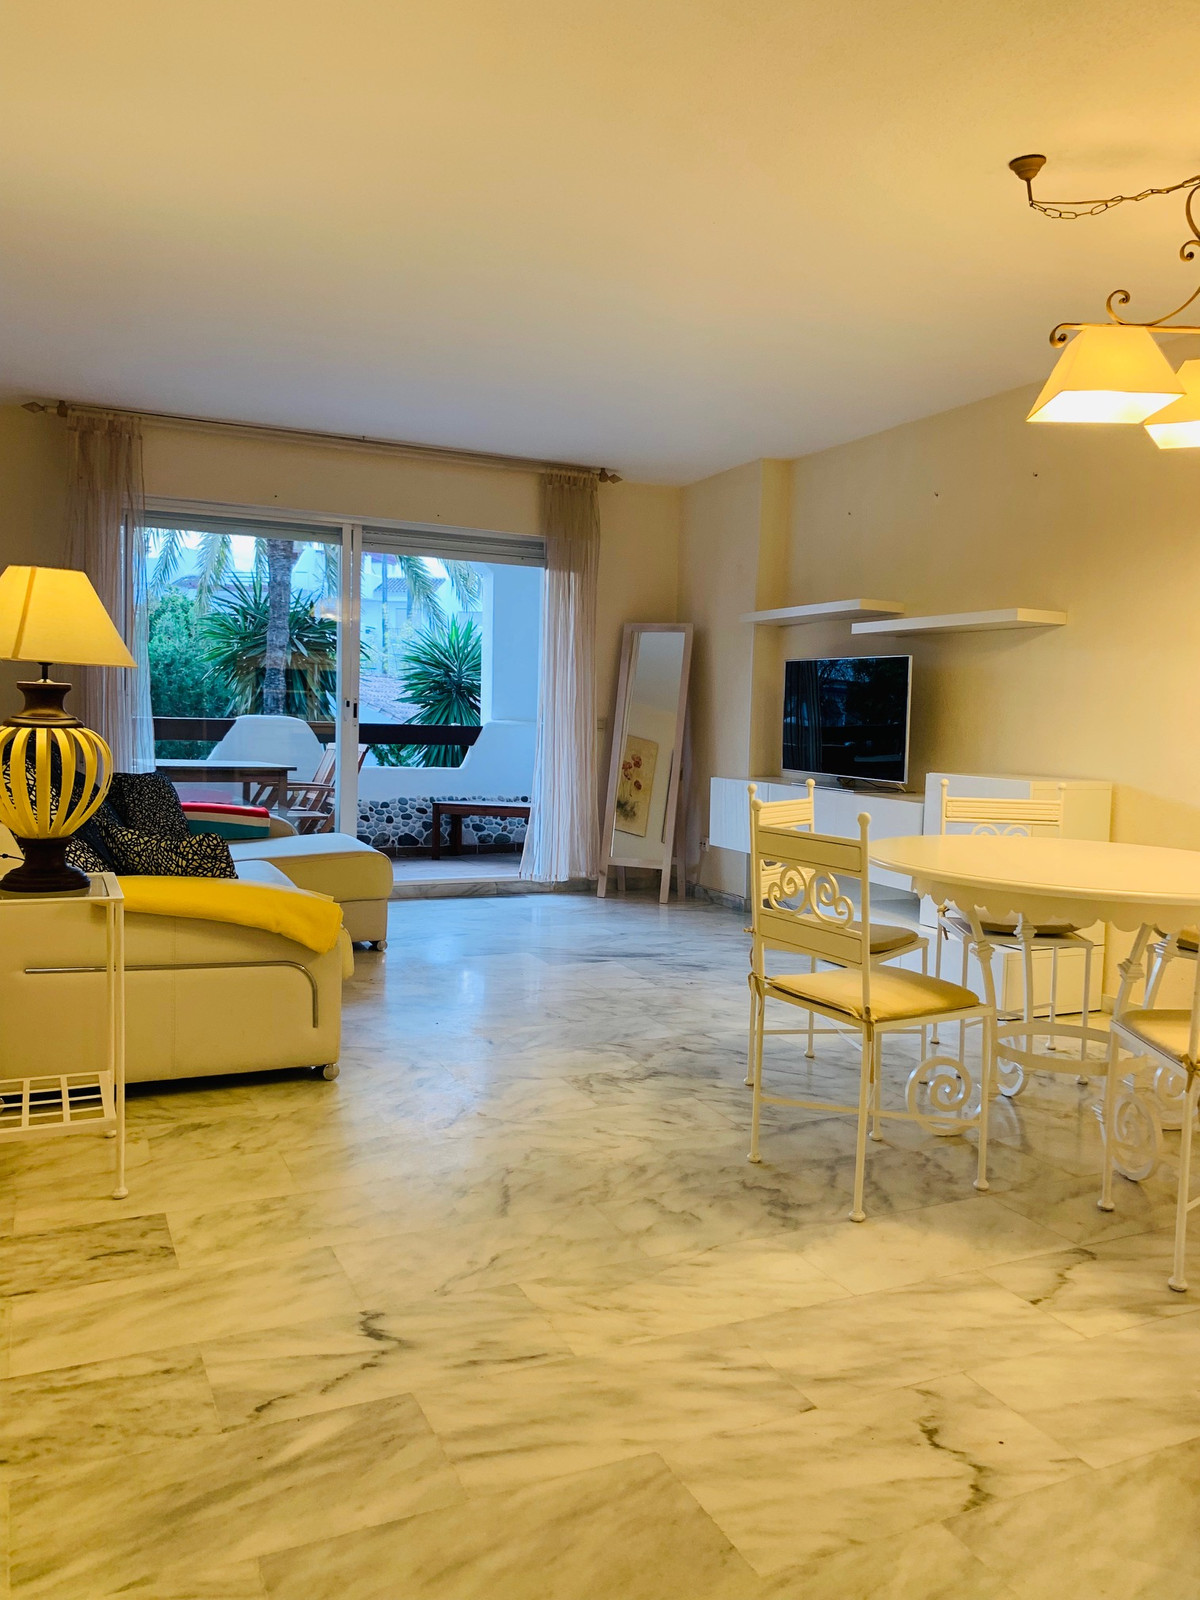 2 bedroom Apartment For Sale in Cancelada, Málaga - thumb 4